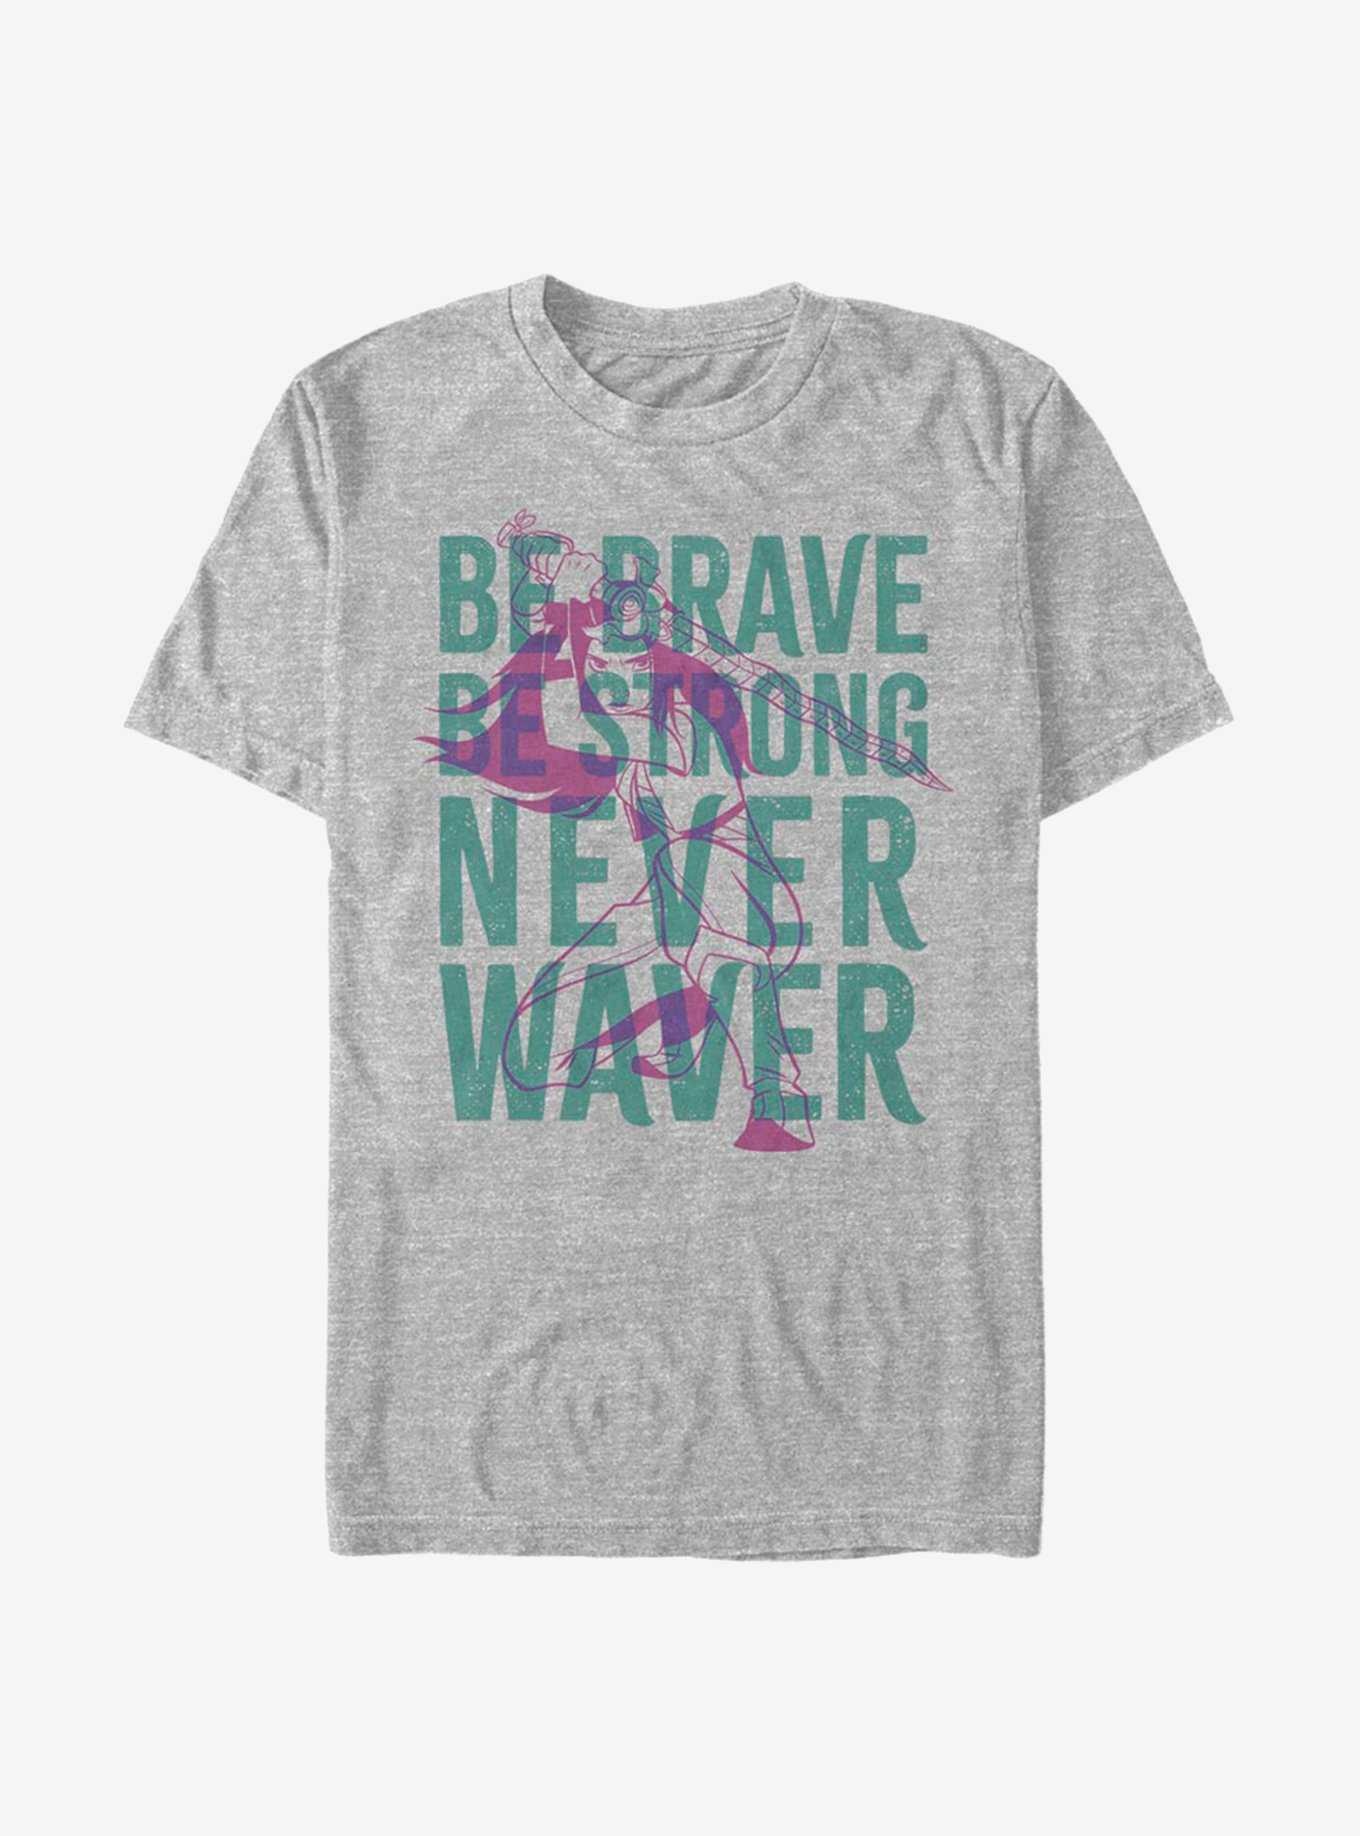 Disney Raya and the Last Dragon Be Brave Never Waiver T-Shirt, , hi-res